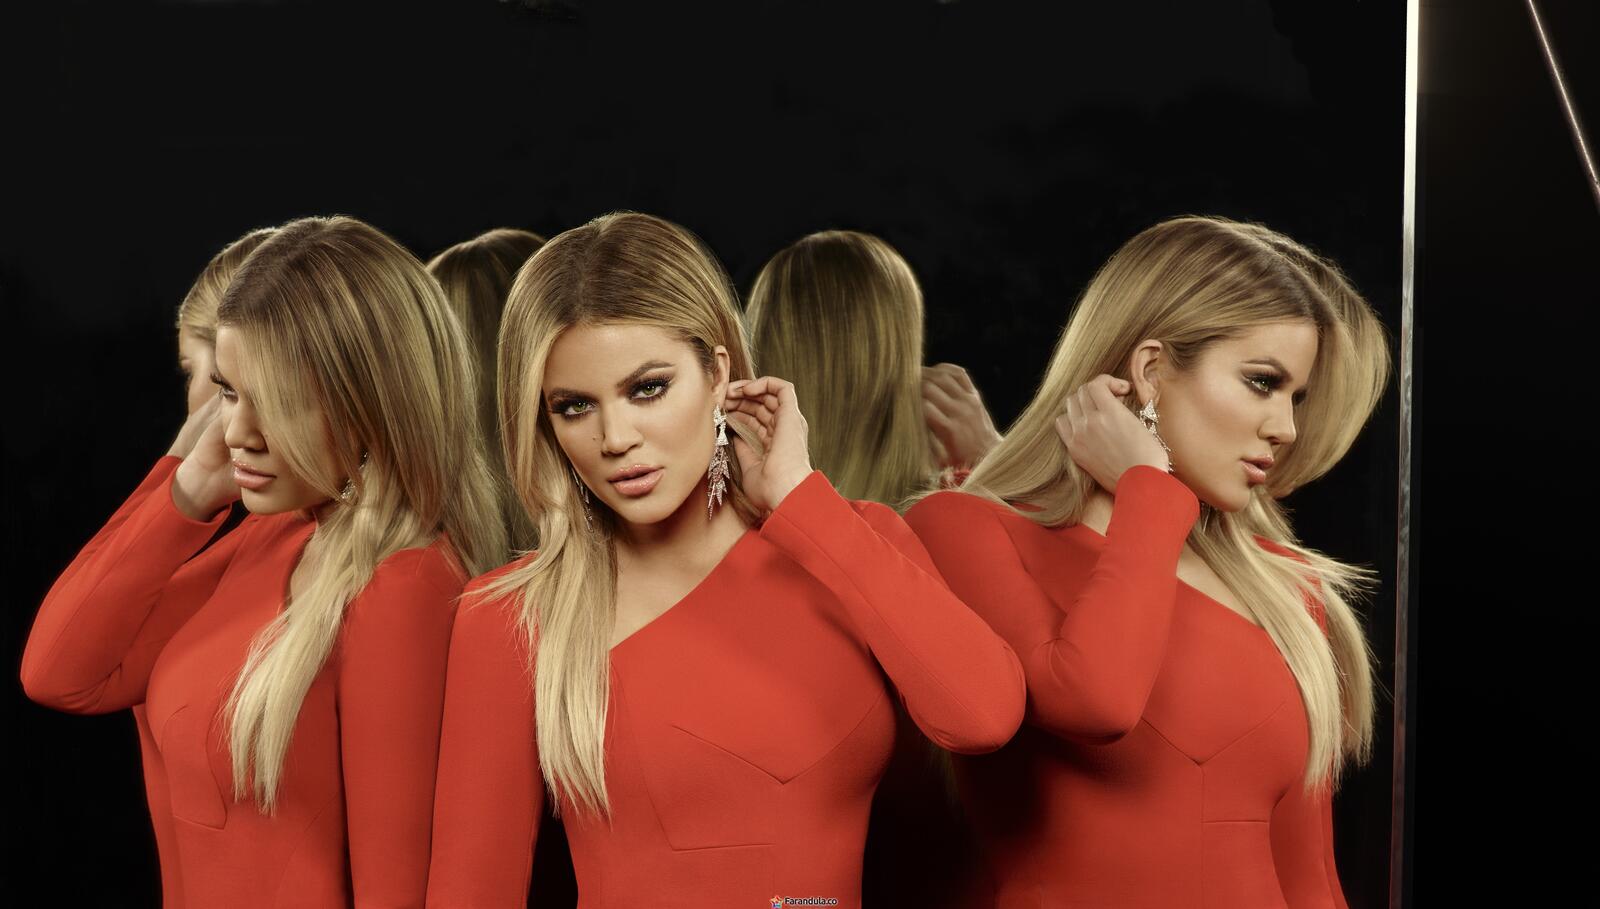 Wallpapers TV show girls Khloe Kardashian on the desktop